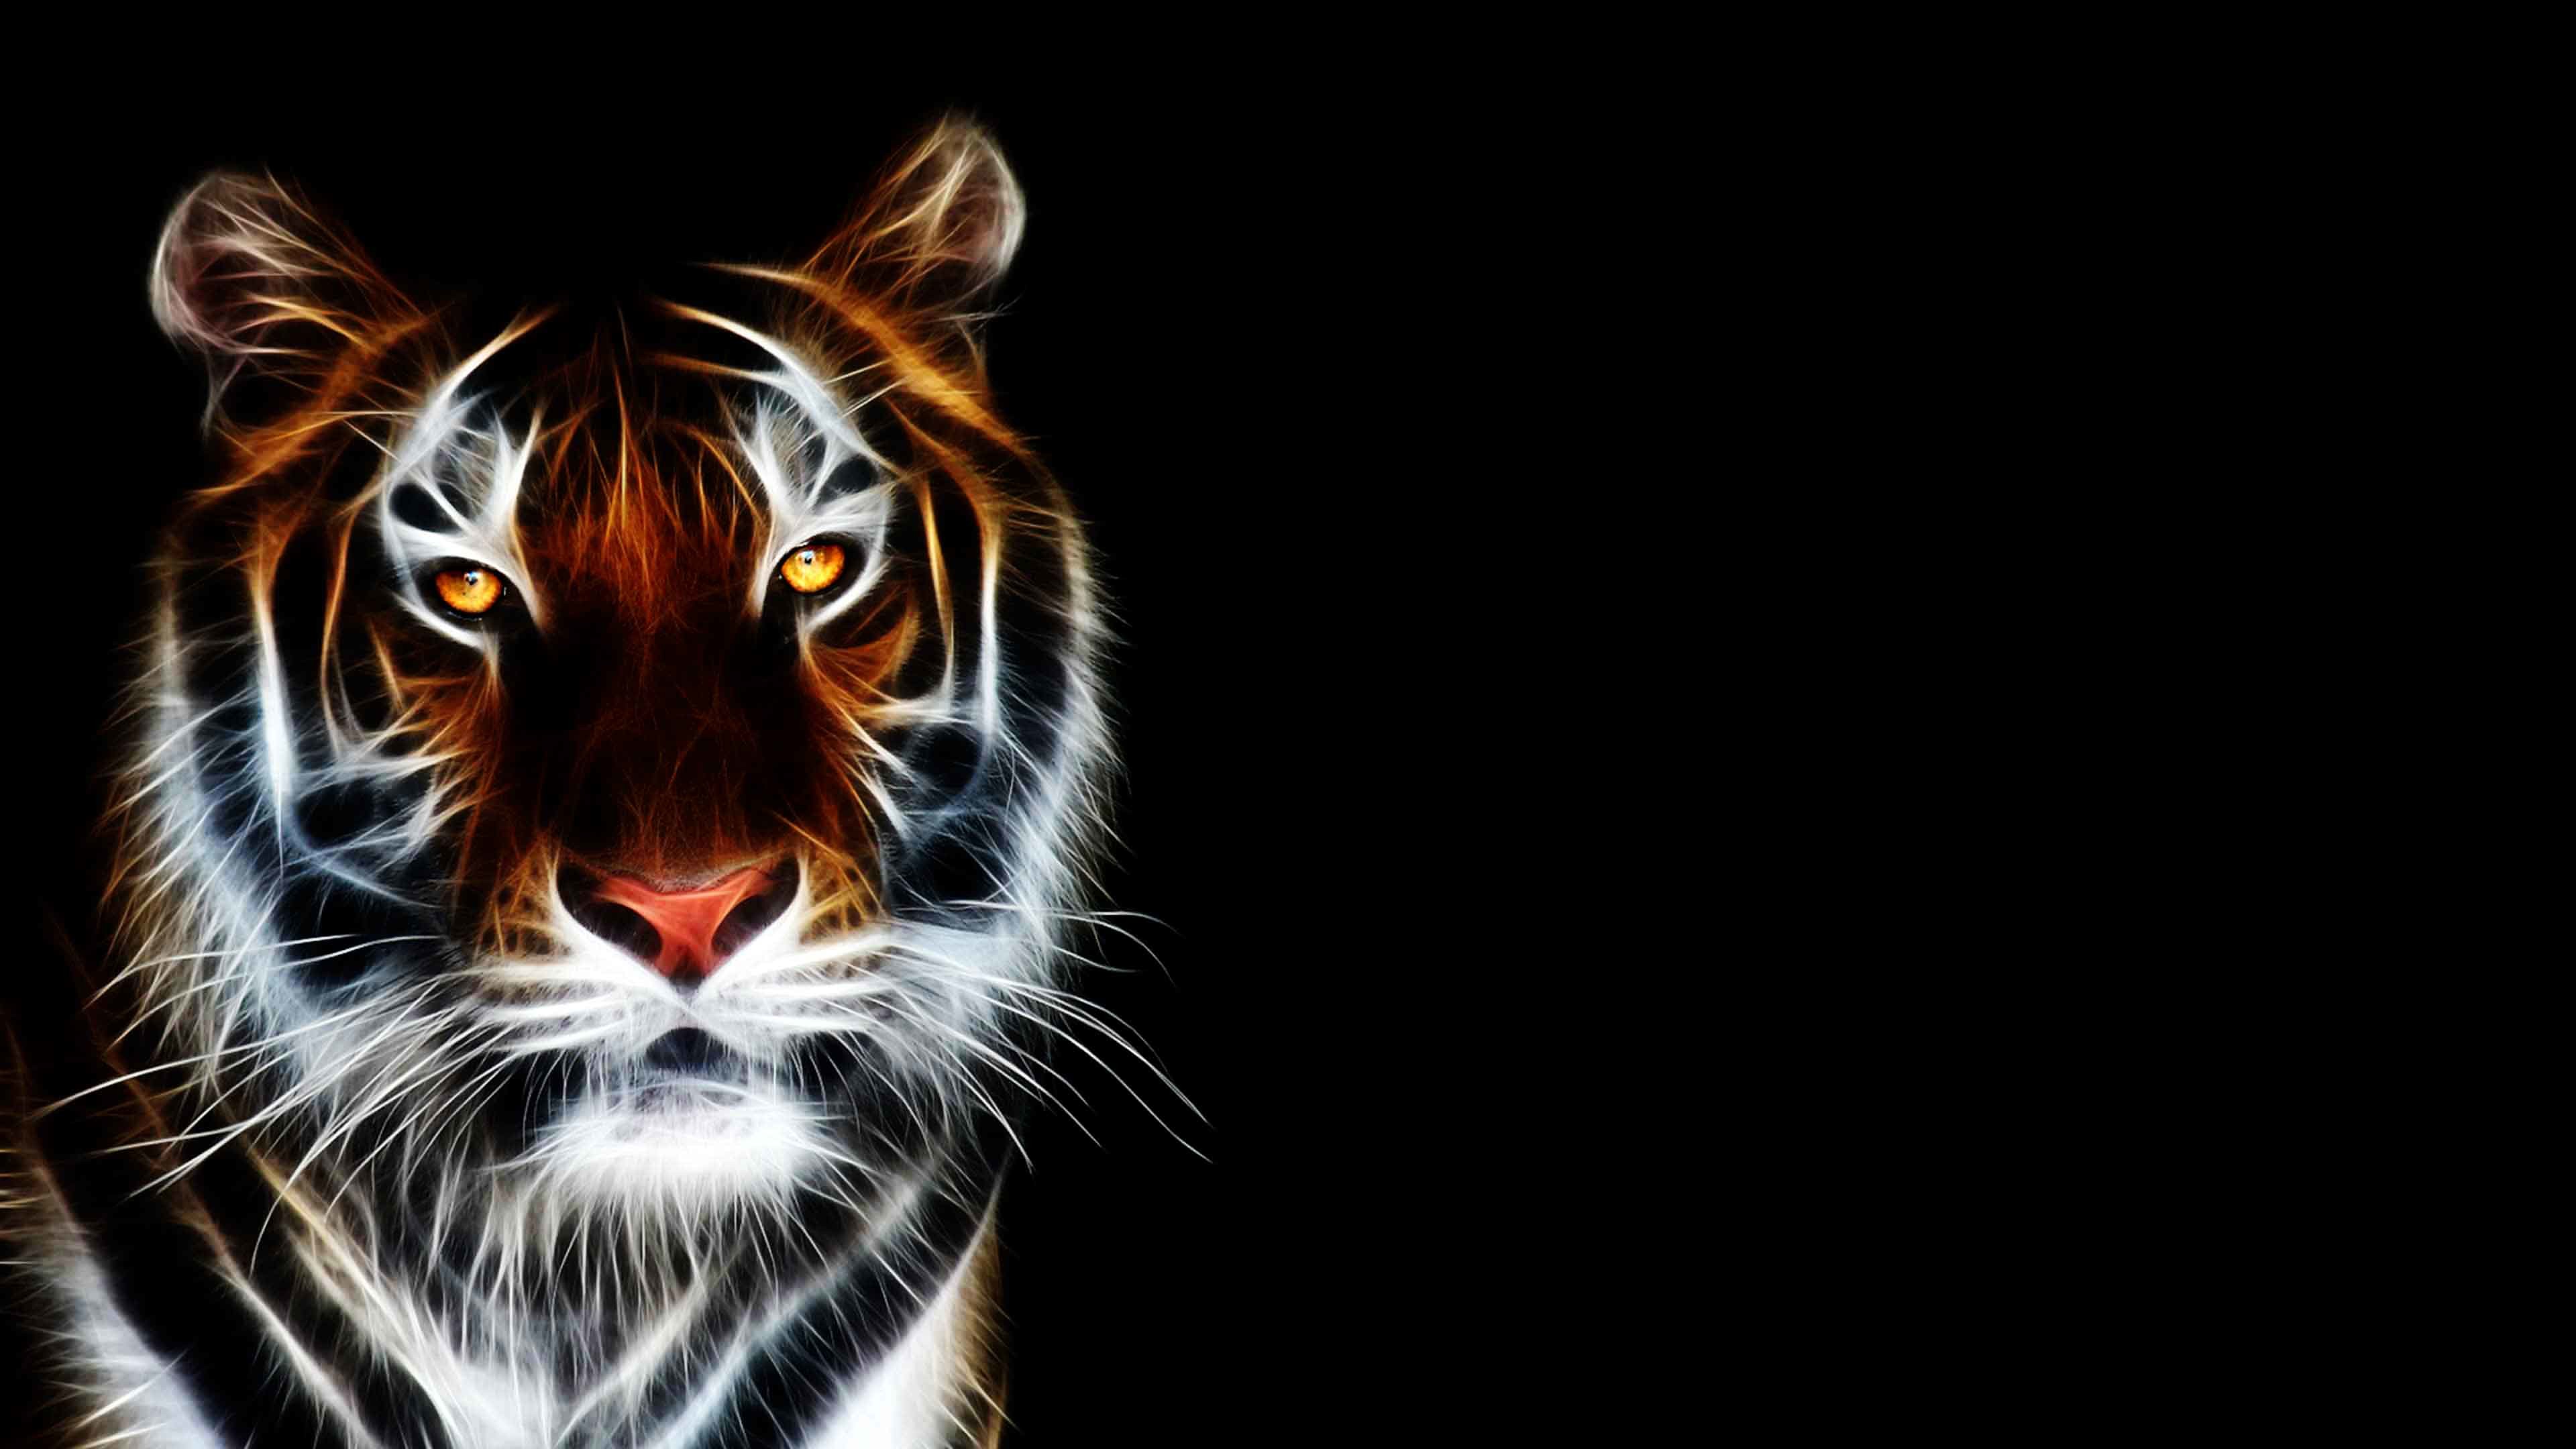 animated tiger wallpaper